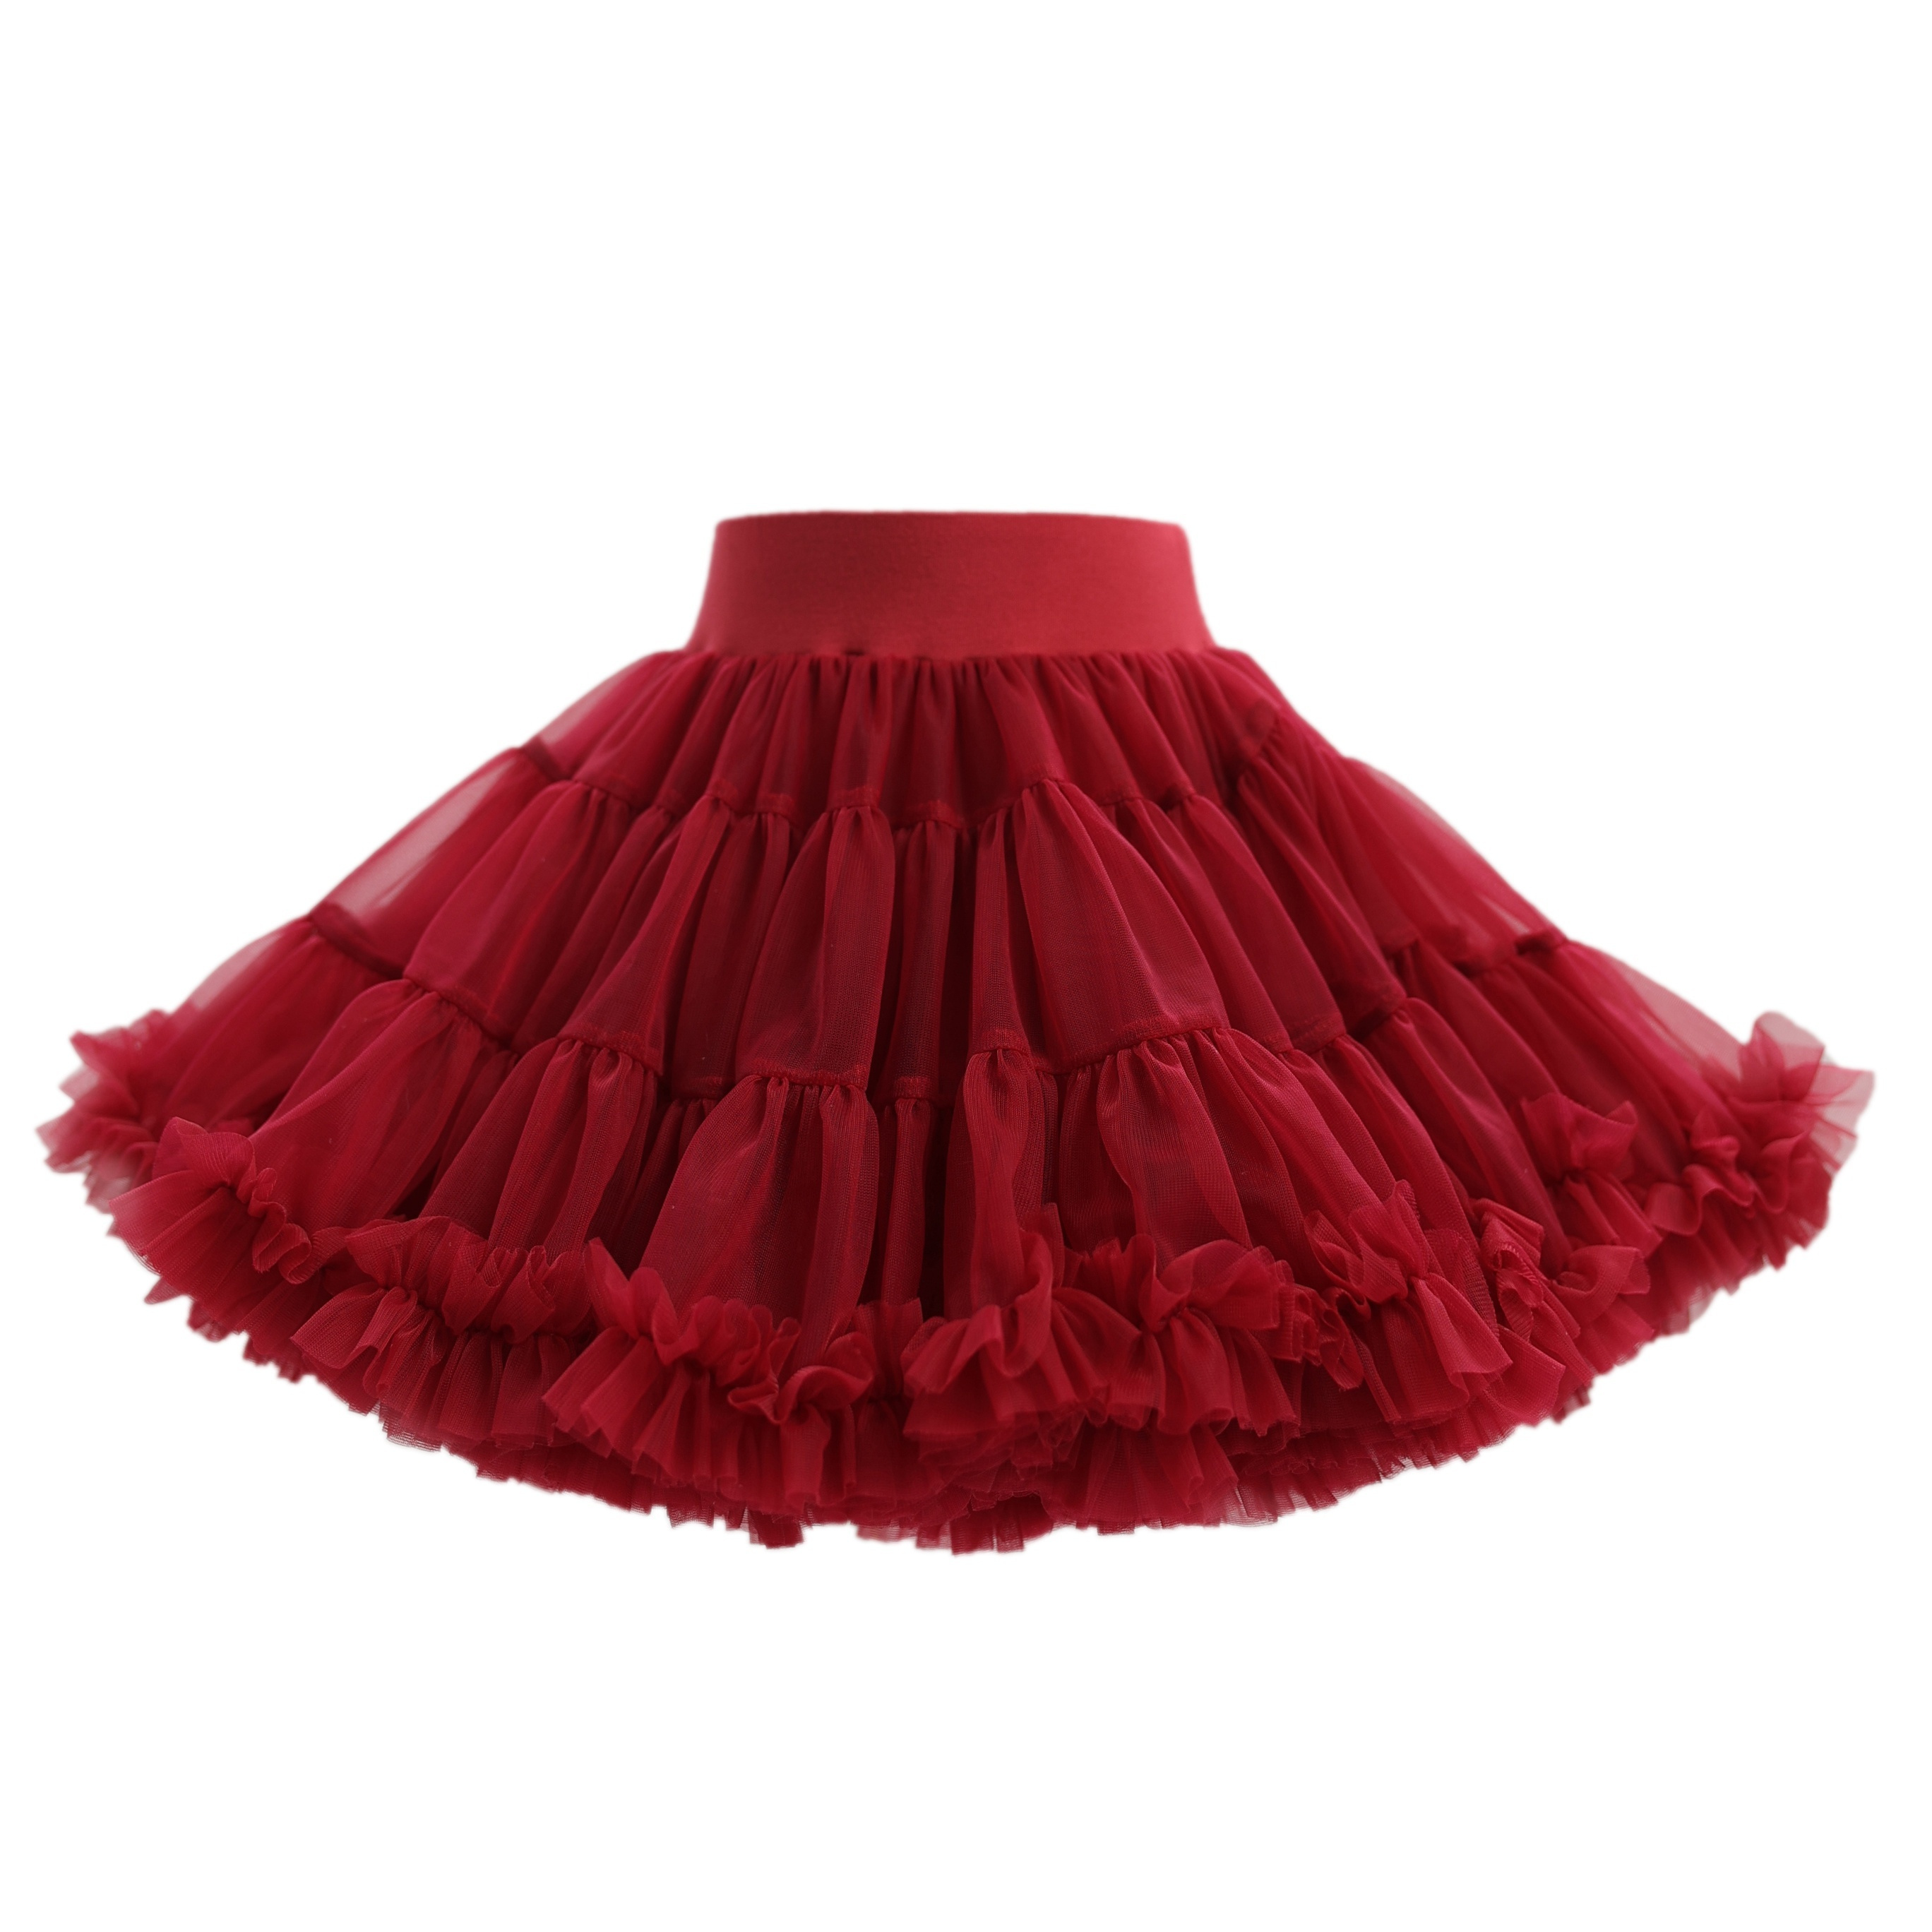 

Girls' Fashion Tulle Skirt, Cute Ballet Princess Fluffy Tutu, Birthday Gift, Red, Layered Frill Design, Elastic Waistband